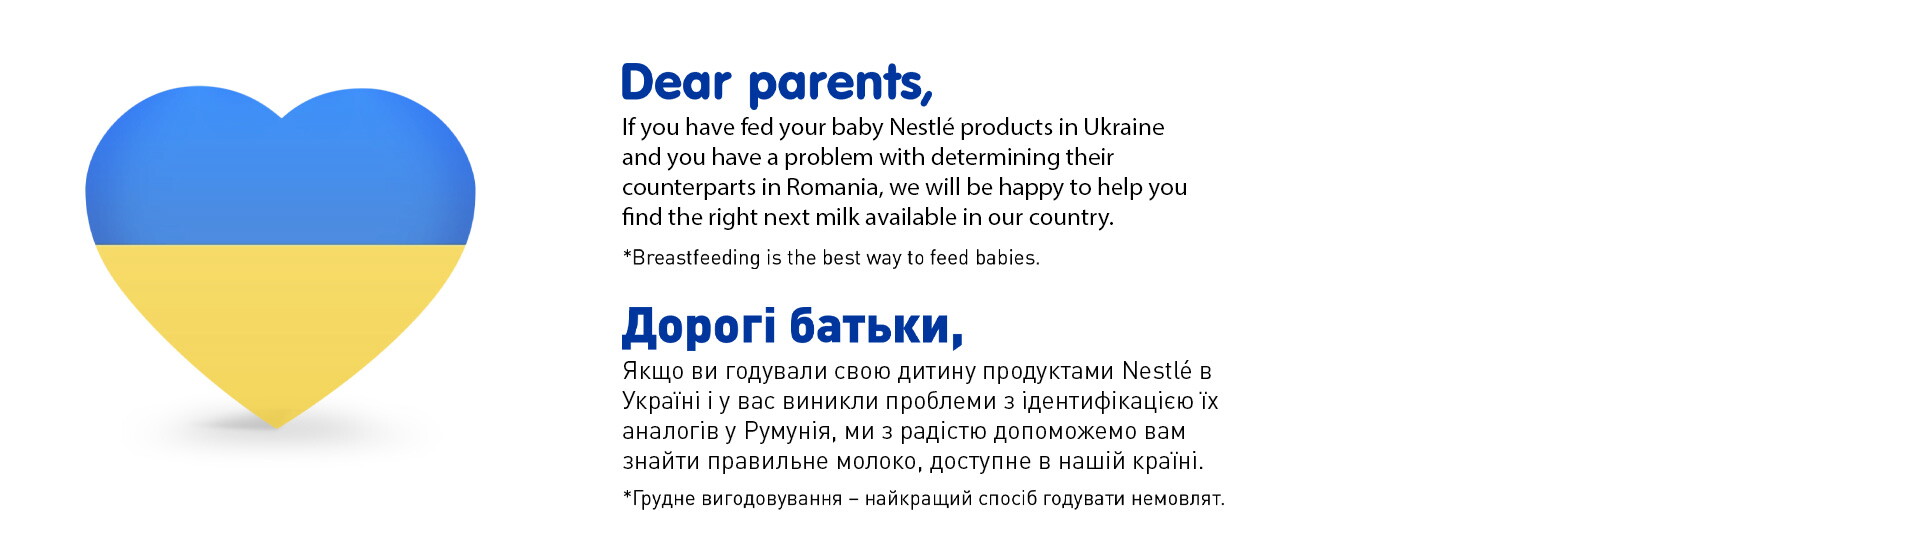 BNR-Nestle-Ucraina